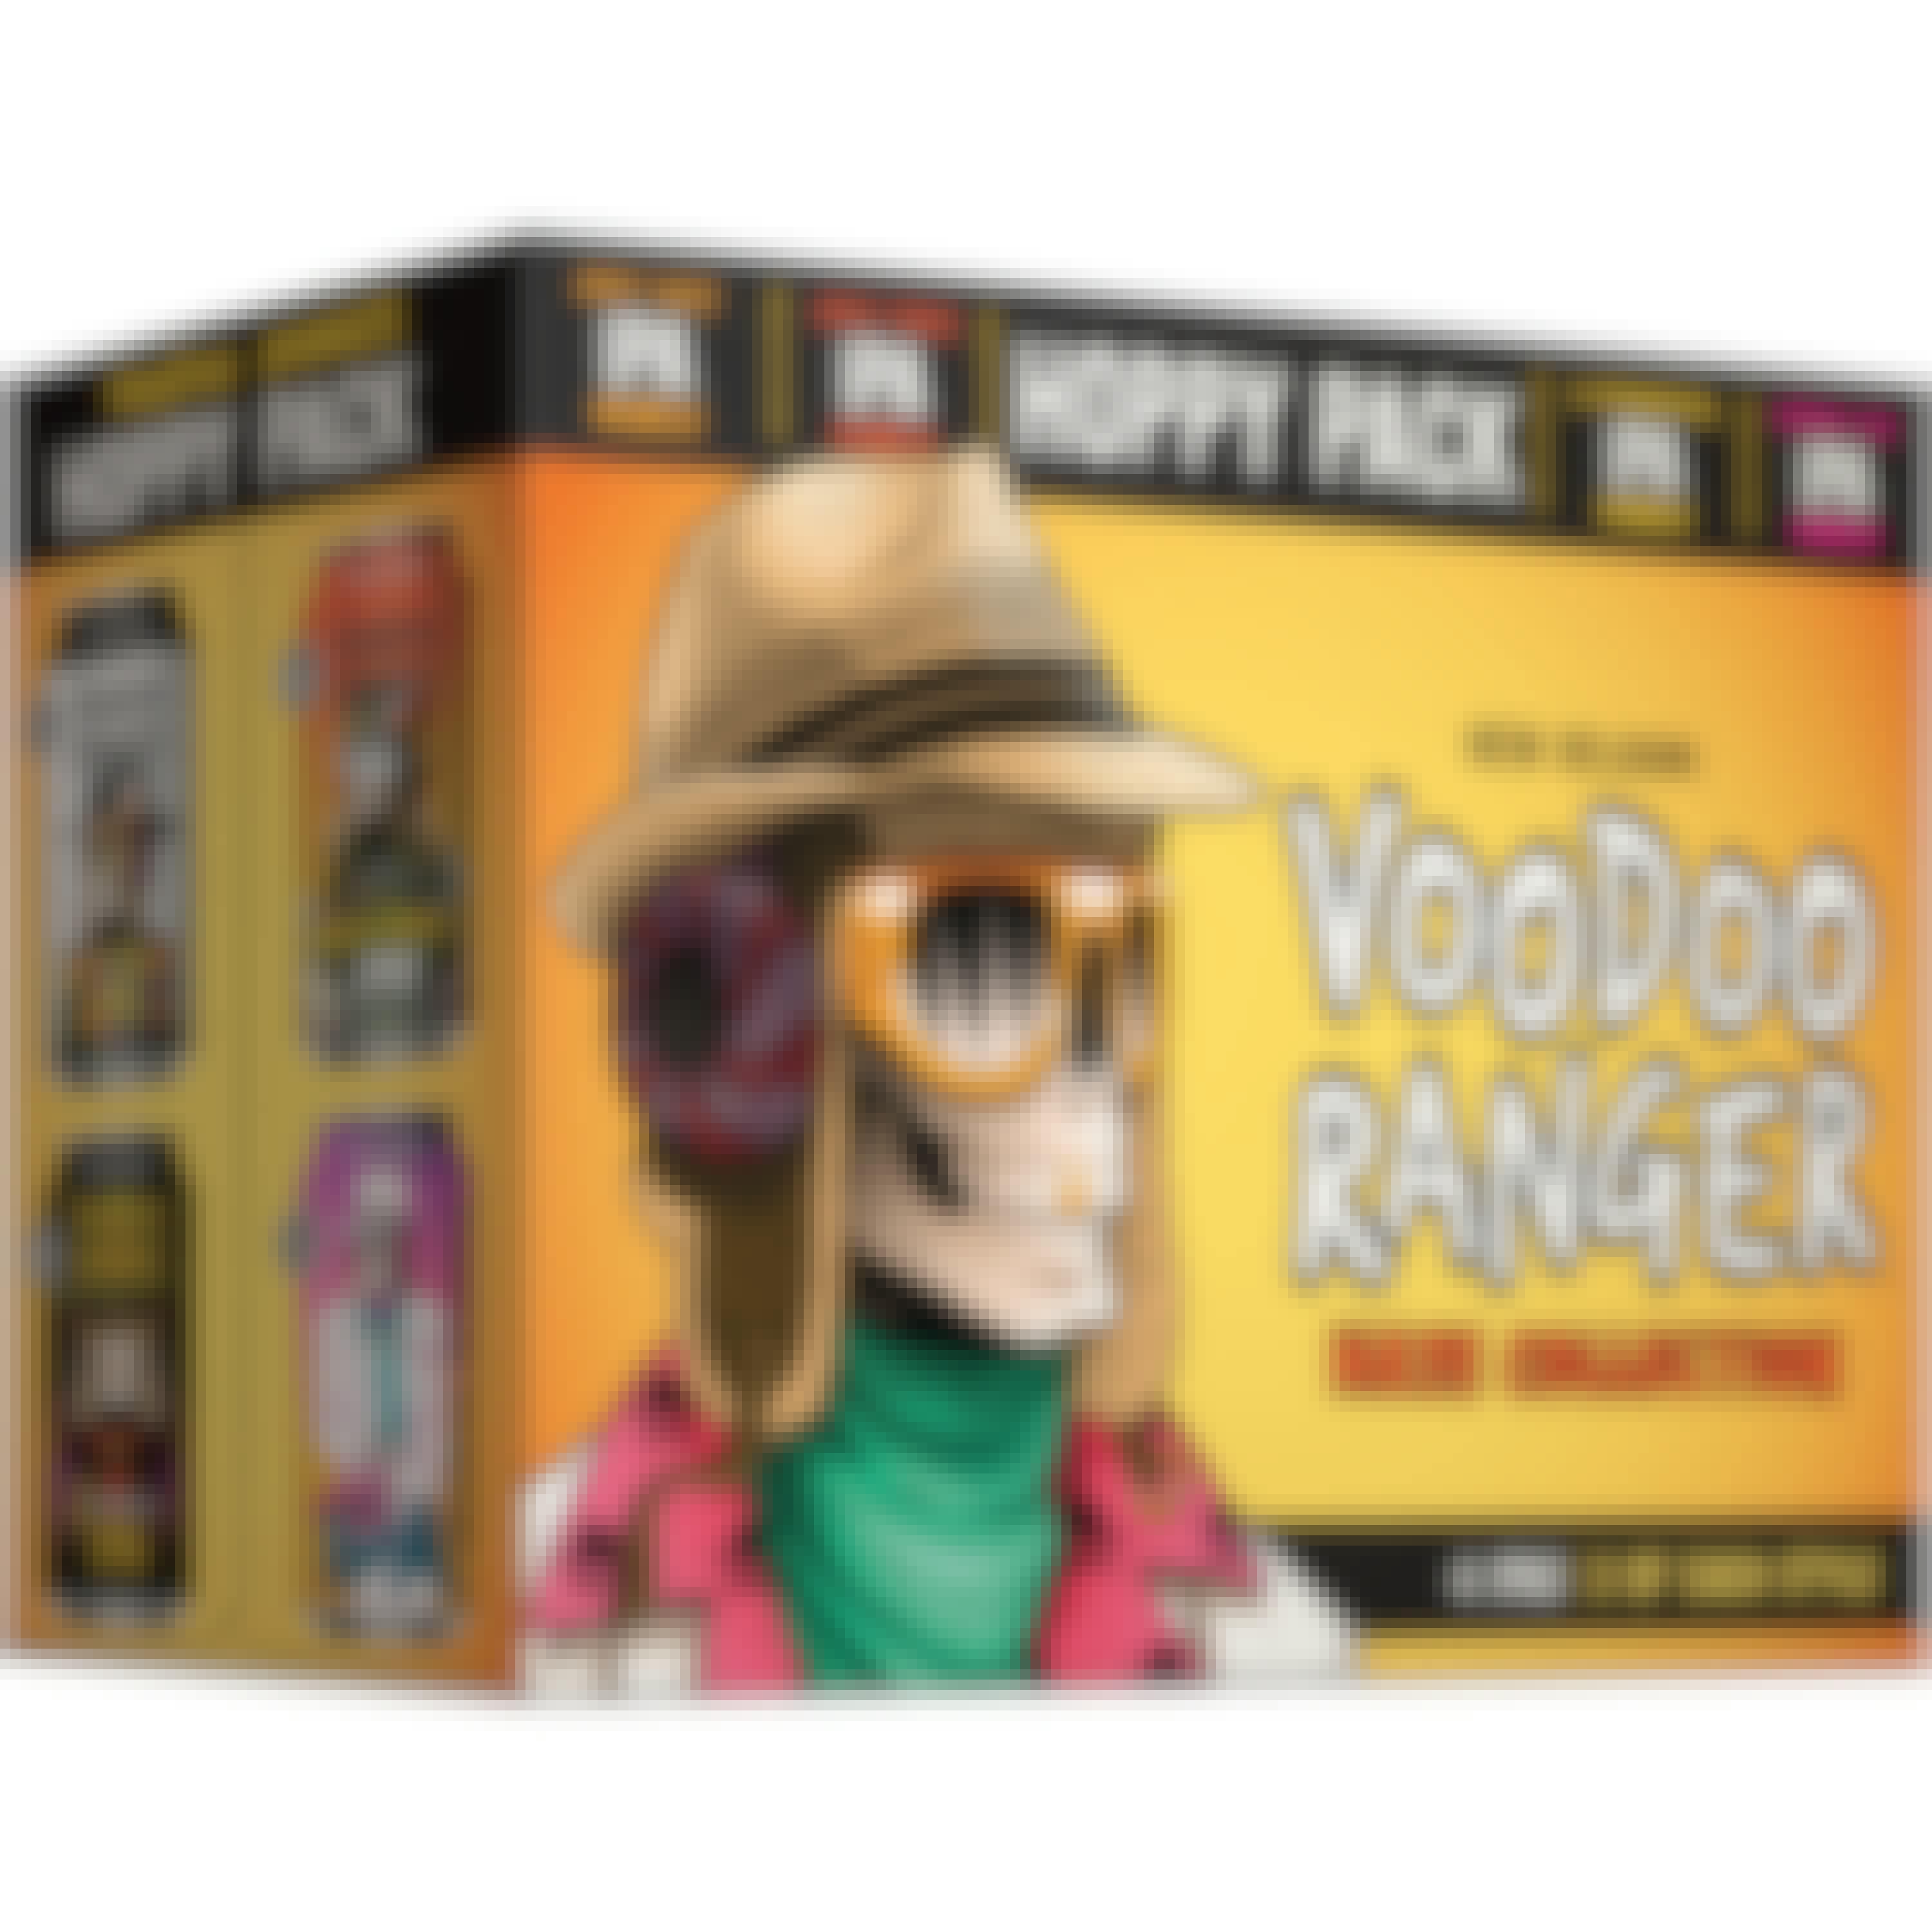 New Belgium Voodoo Ranger Hoppy Variety Pack 12 pack 12 oz. Can